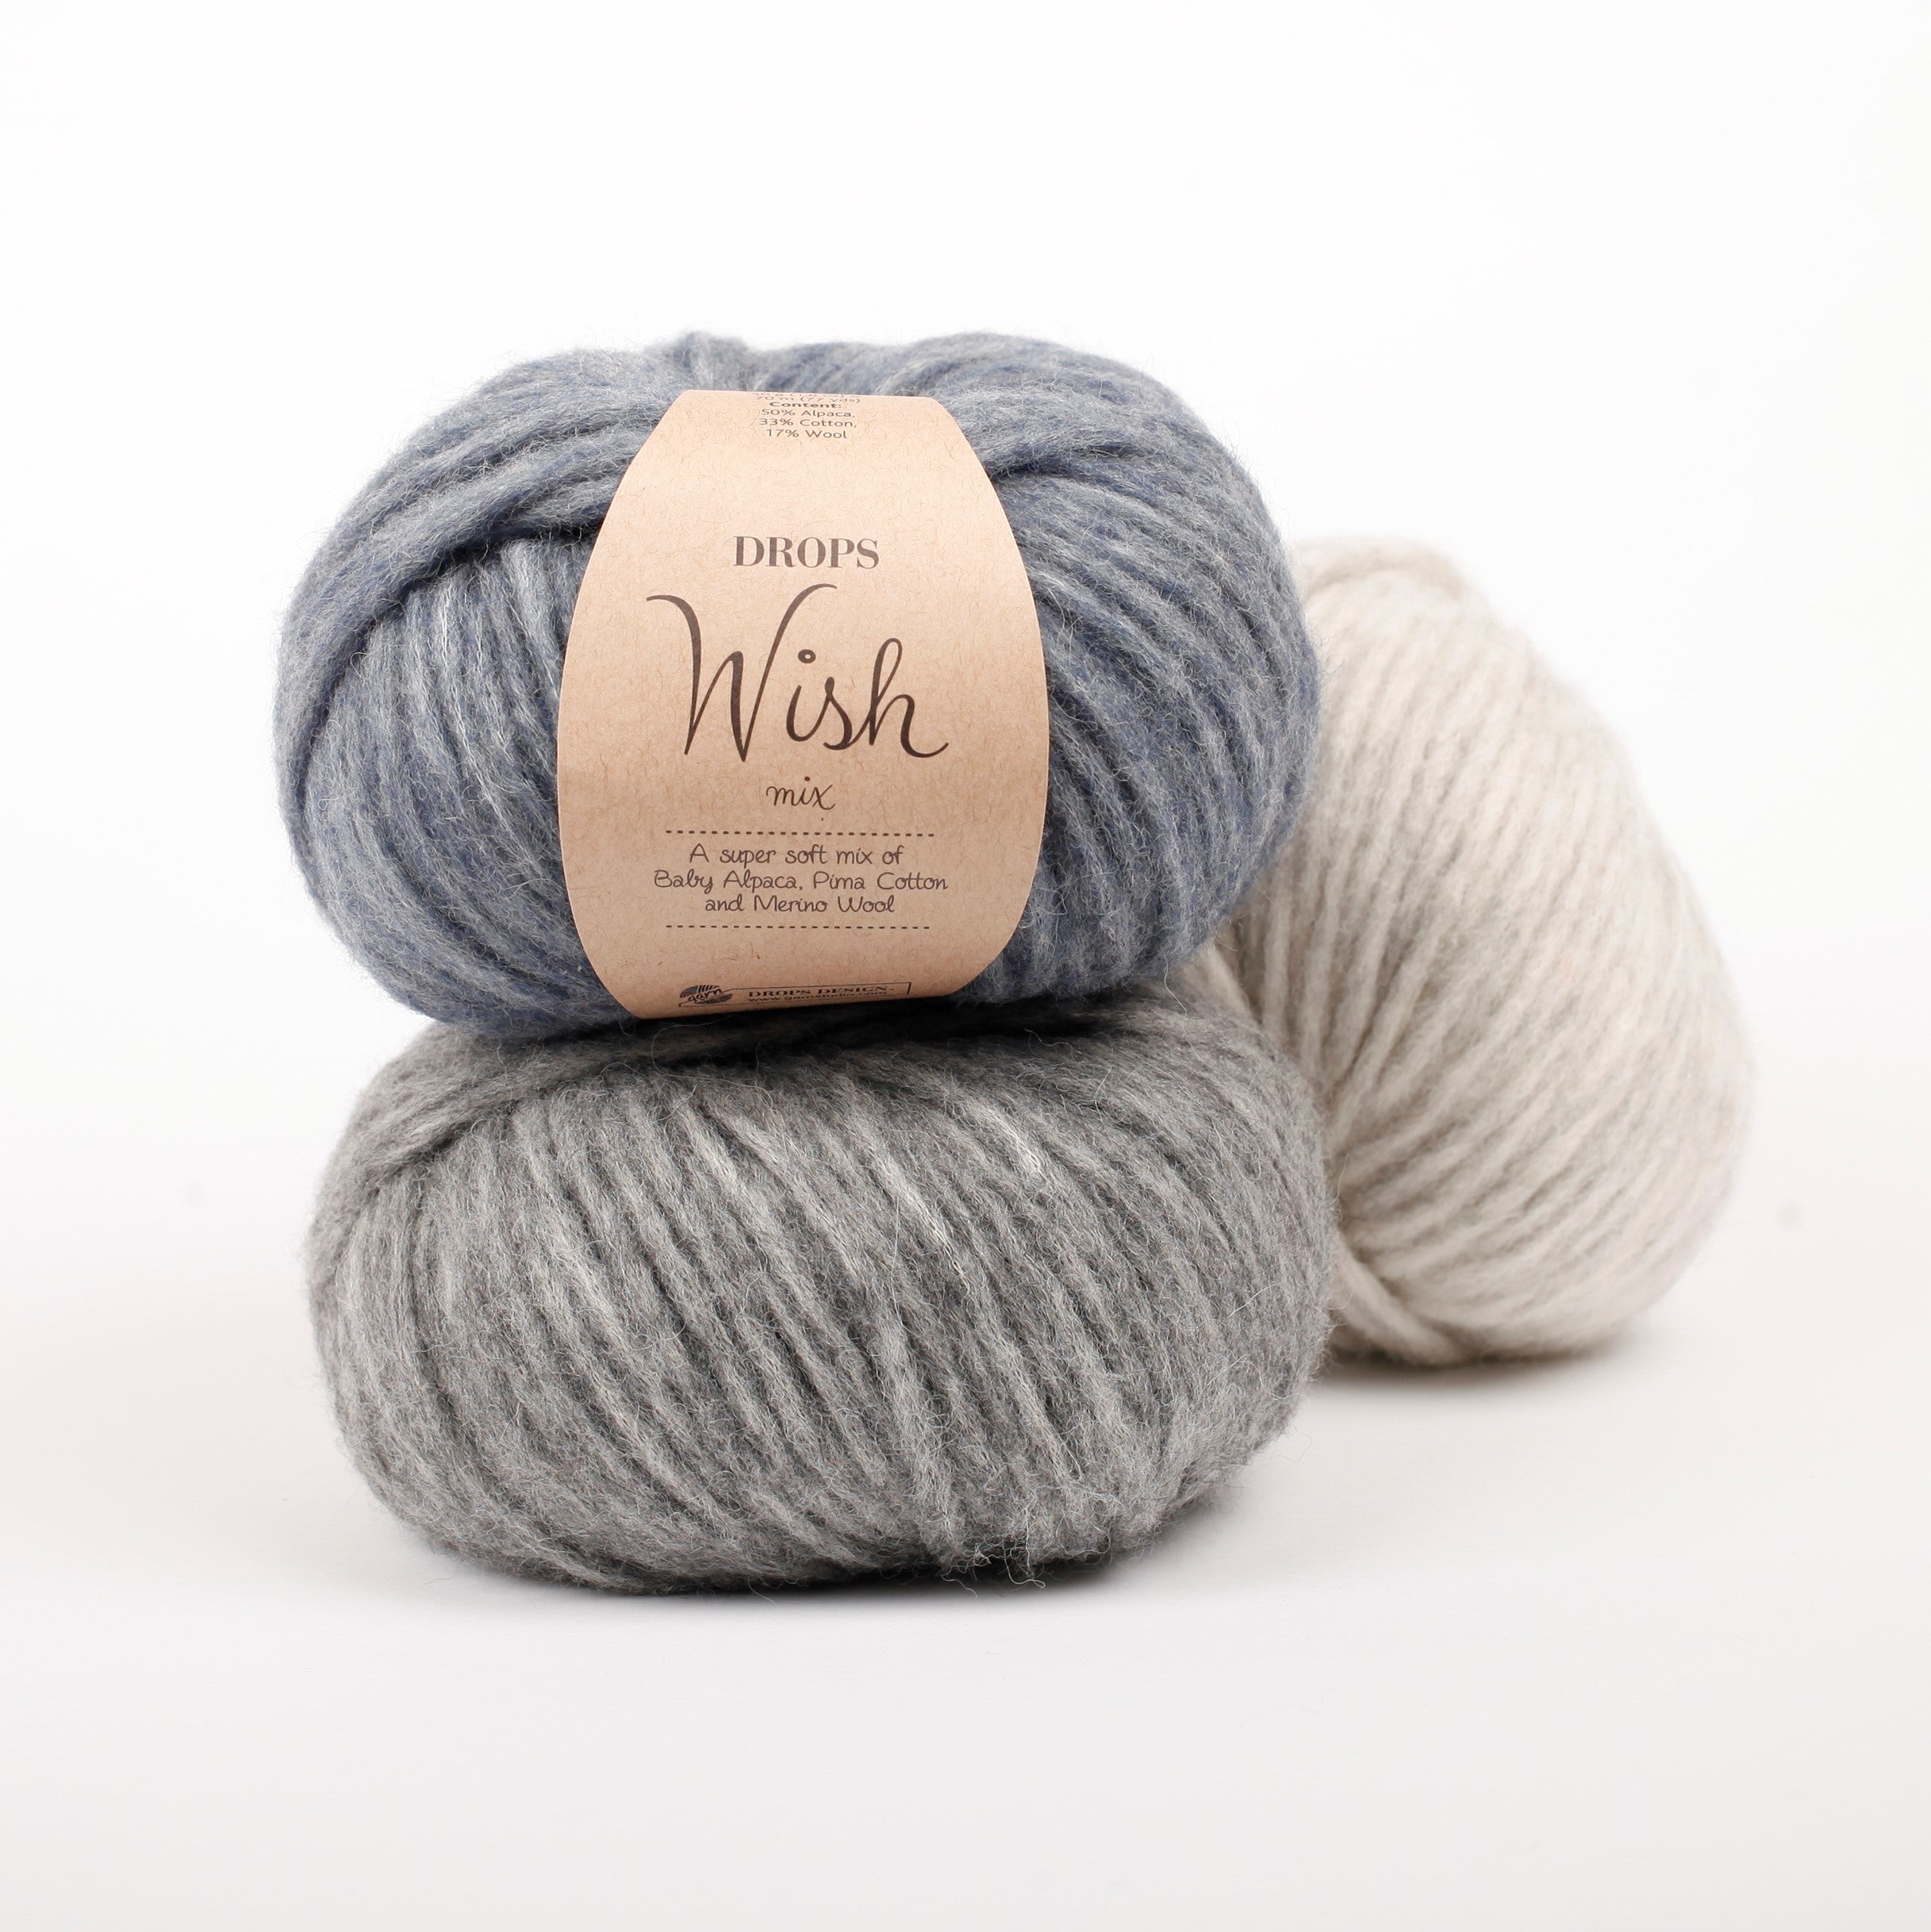 DROPS Air a Medium Thick Blow Yarn, Baby Alpaca and Merino Wool, Beautiful  Knitting Yarn 